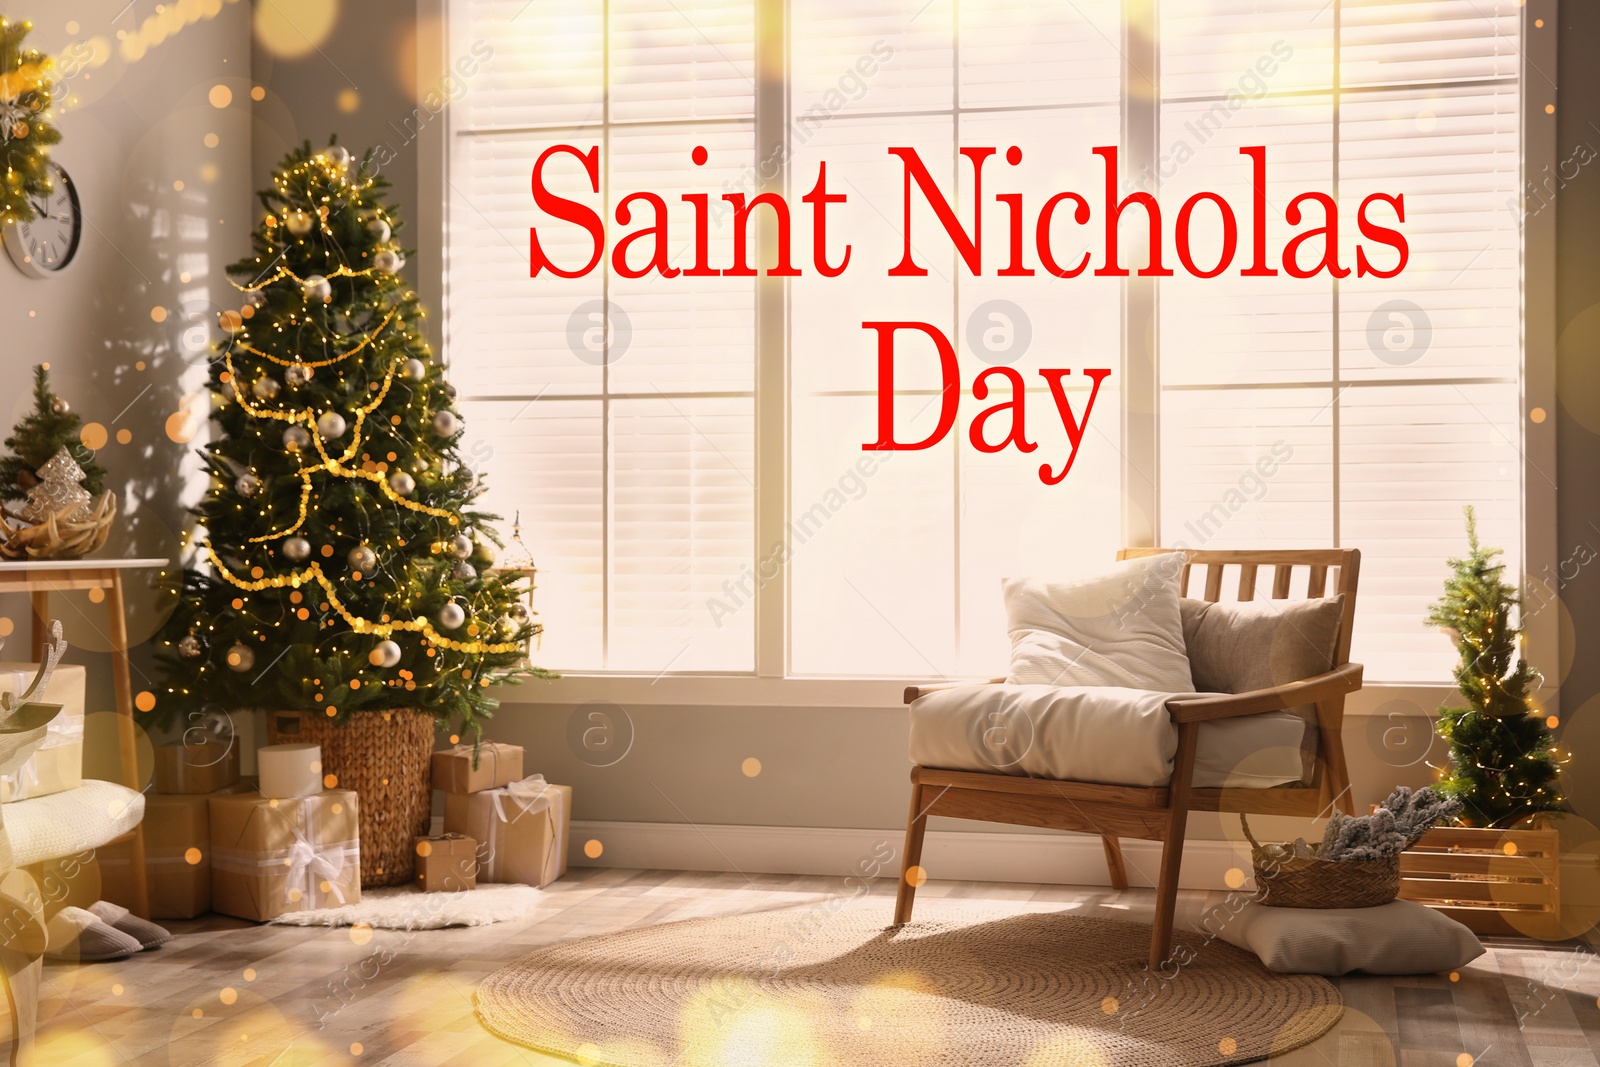 Image of Saint Nicholas Day. Stylish room with Christmas decorations